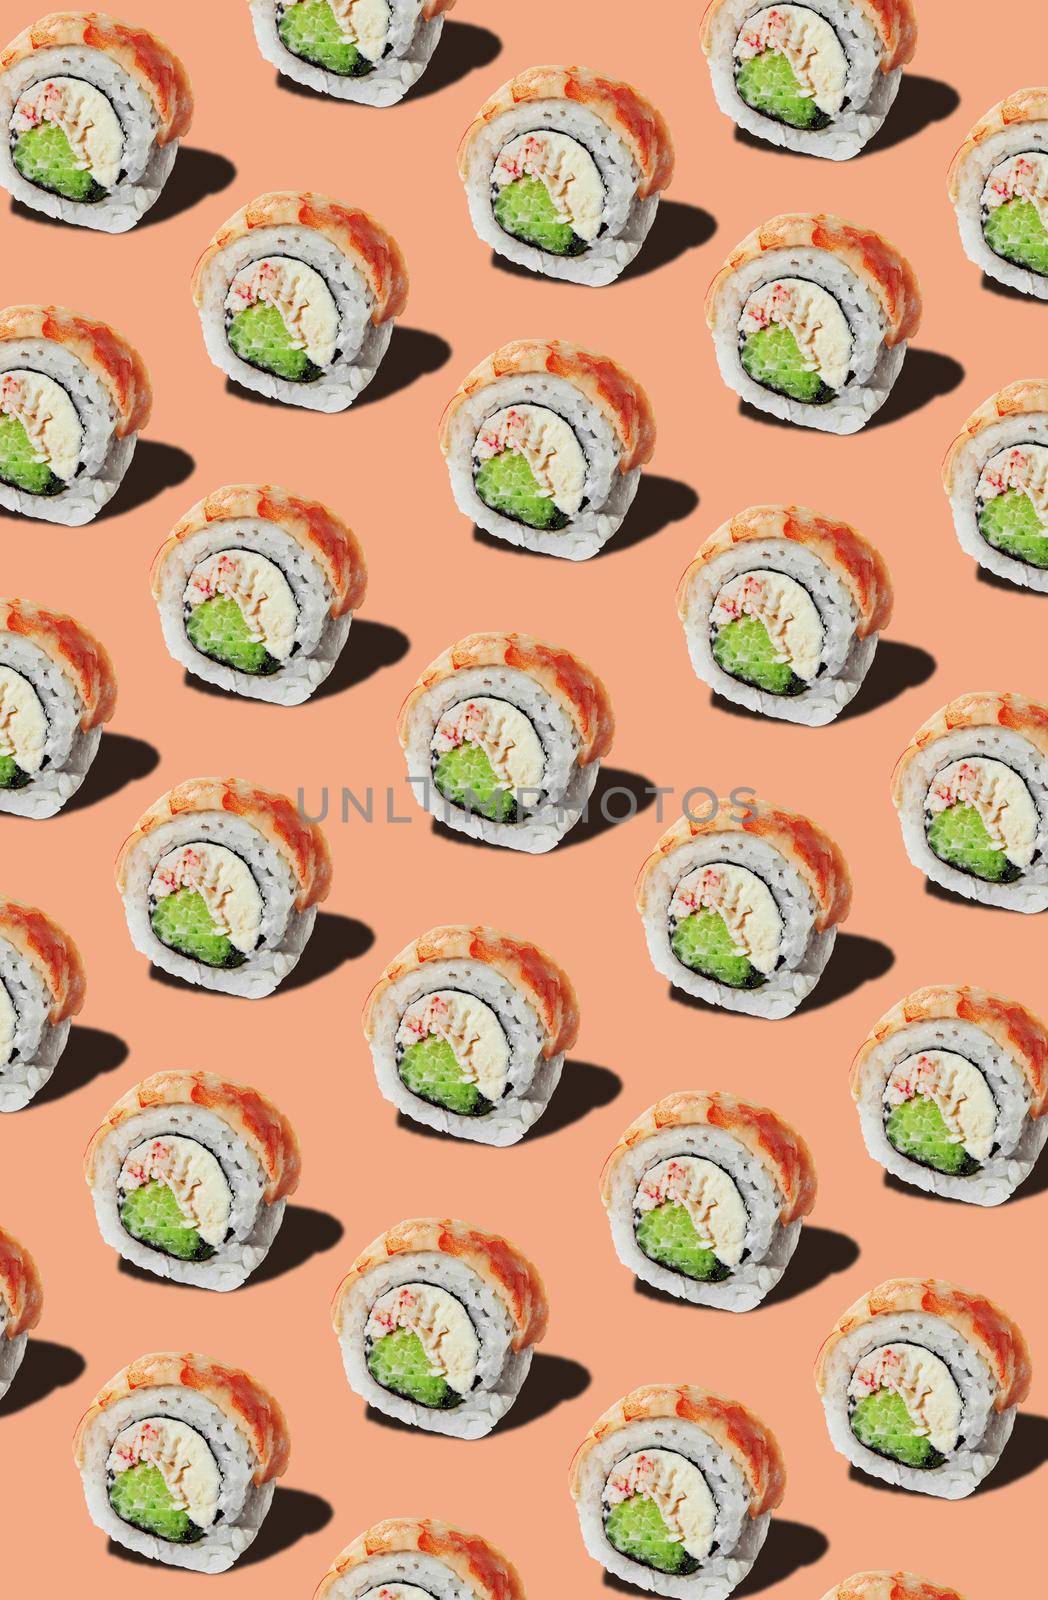 Pattern of rolls with prawn fillet on pinkish orange background by nazarovsergey